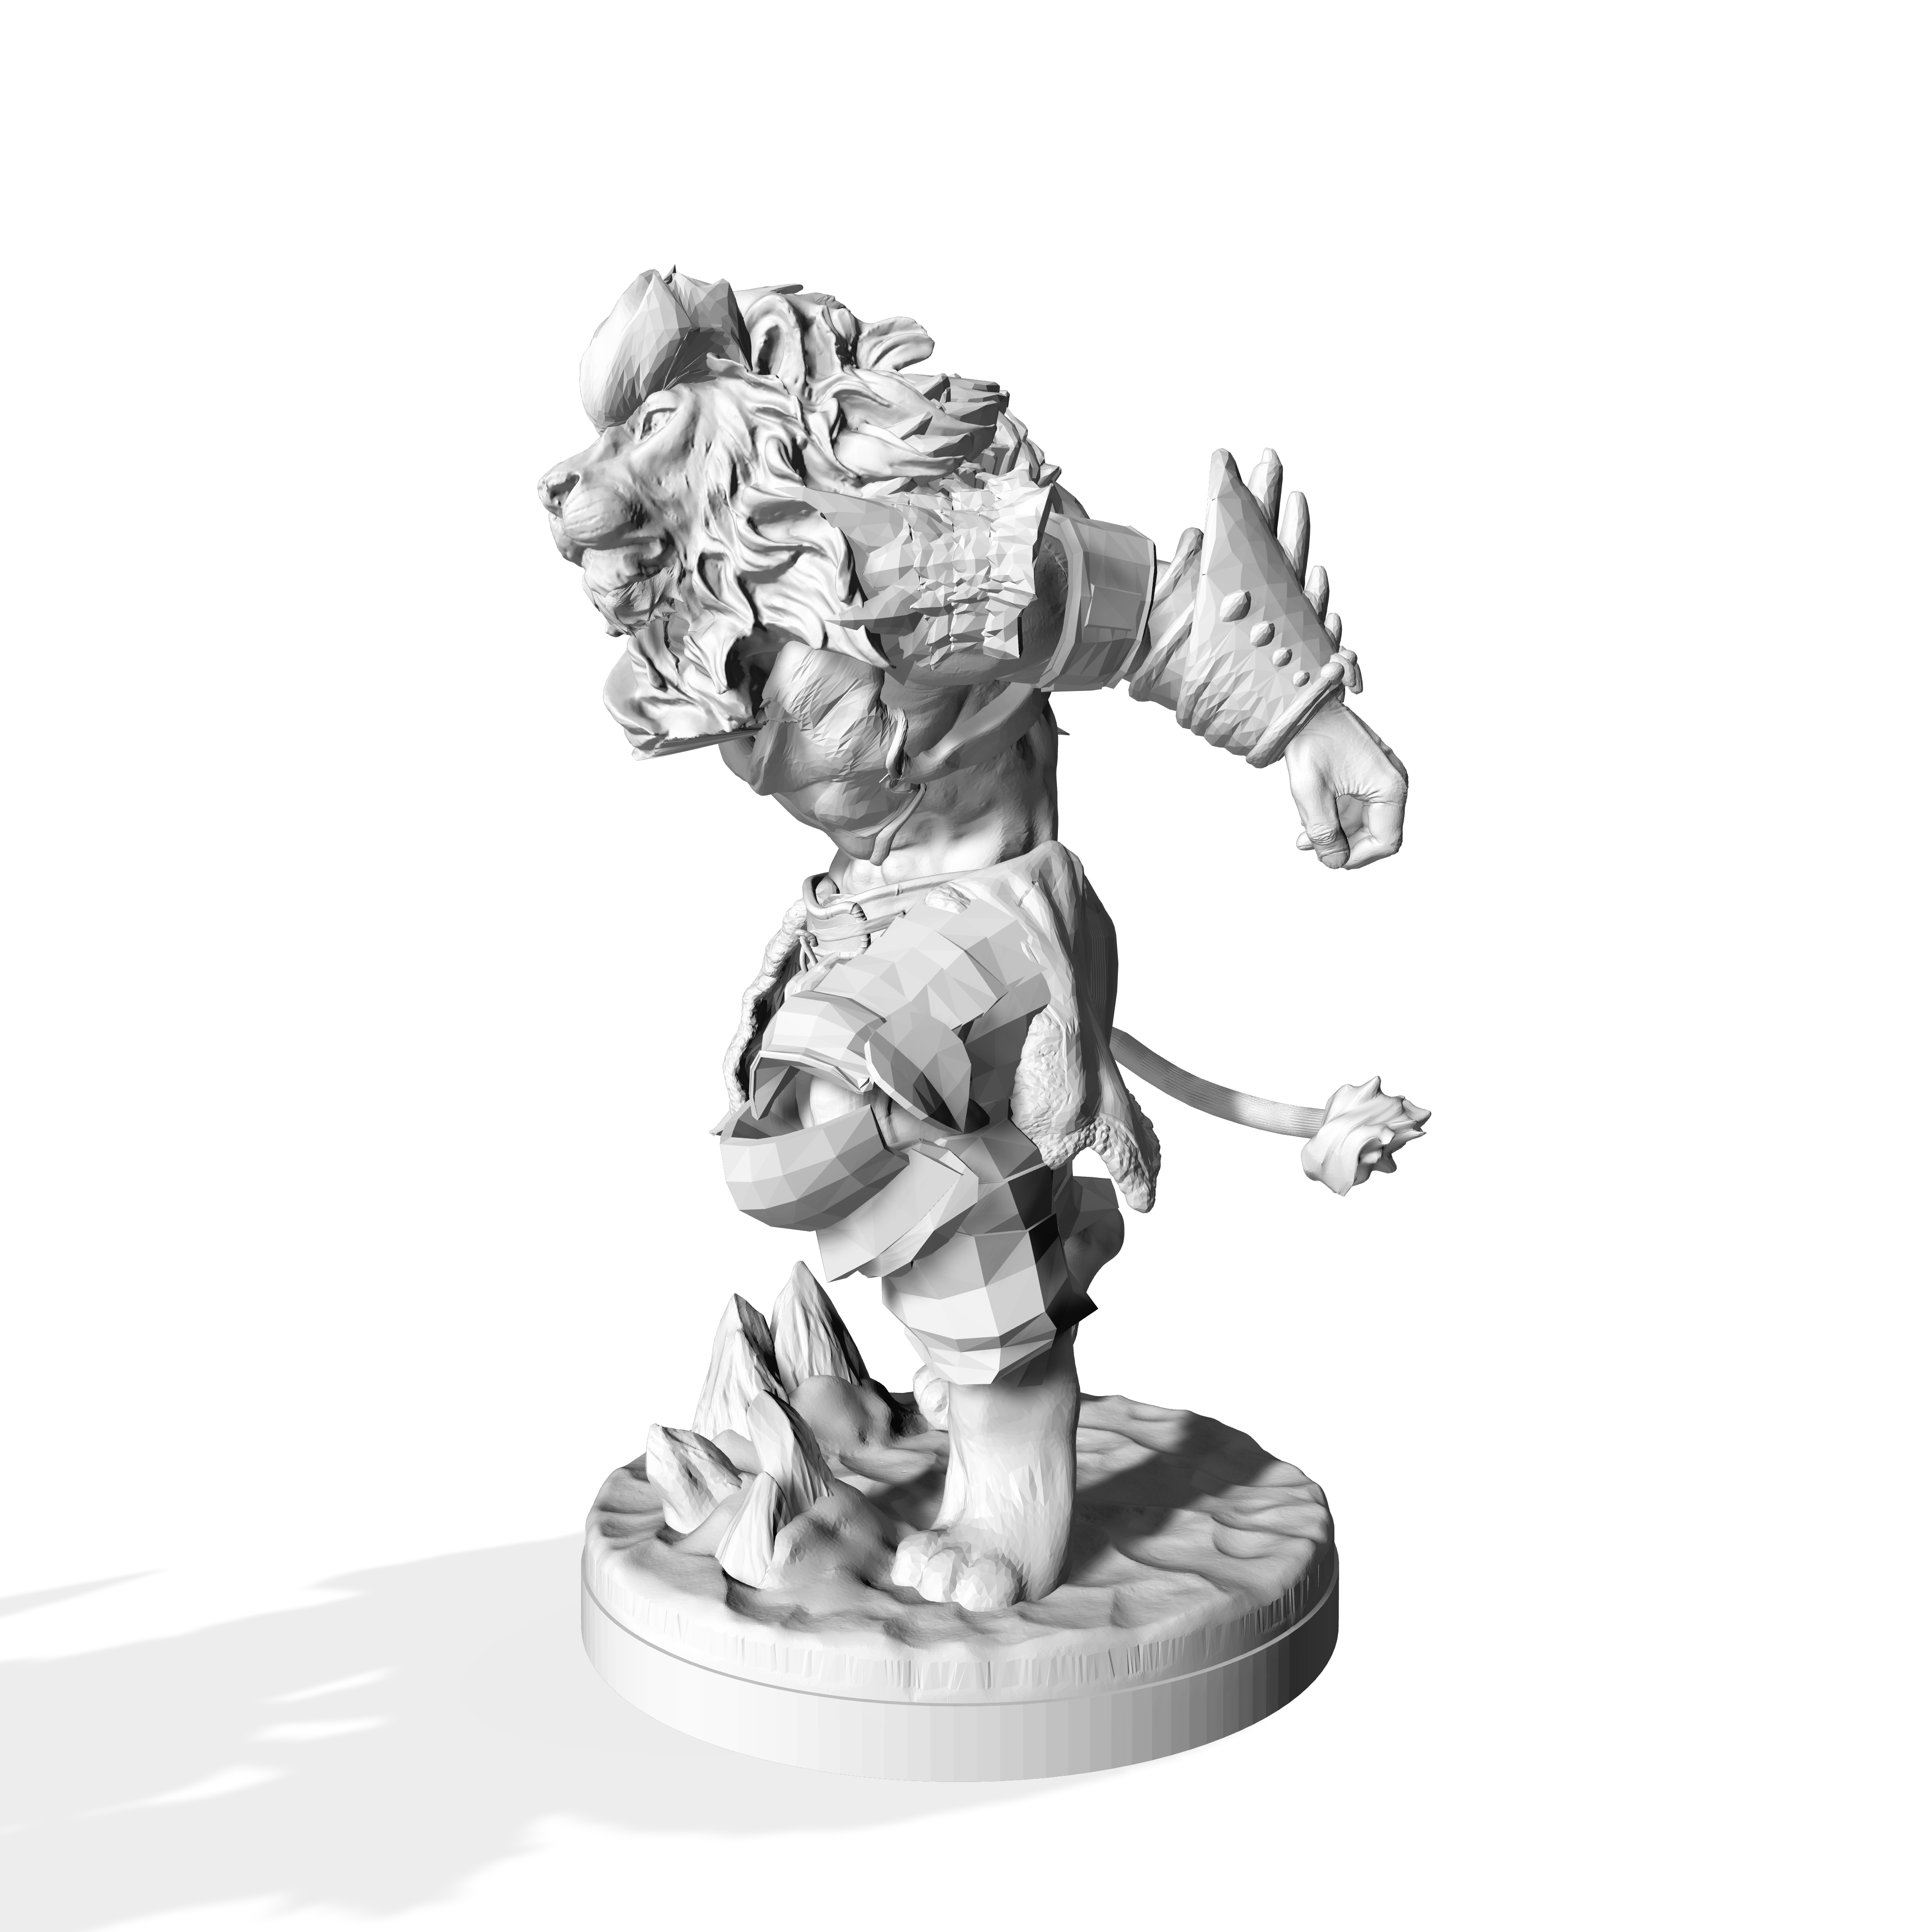 wolfmaker3d lionfolk ferin leonid leonin warrior 3d miniature figurines statue bust